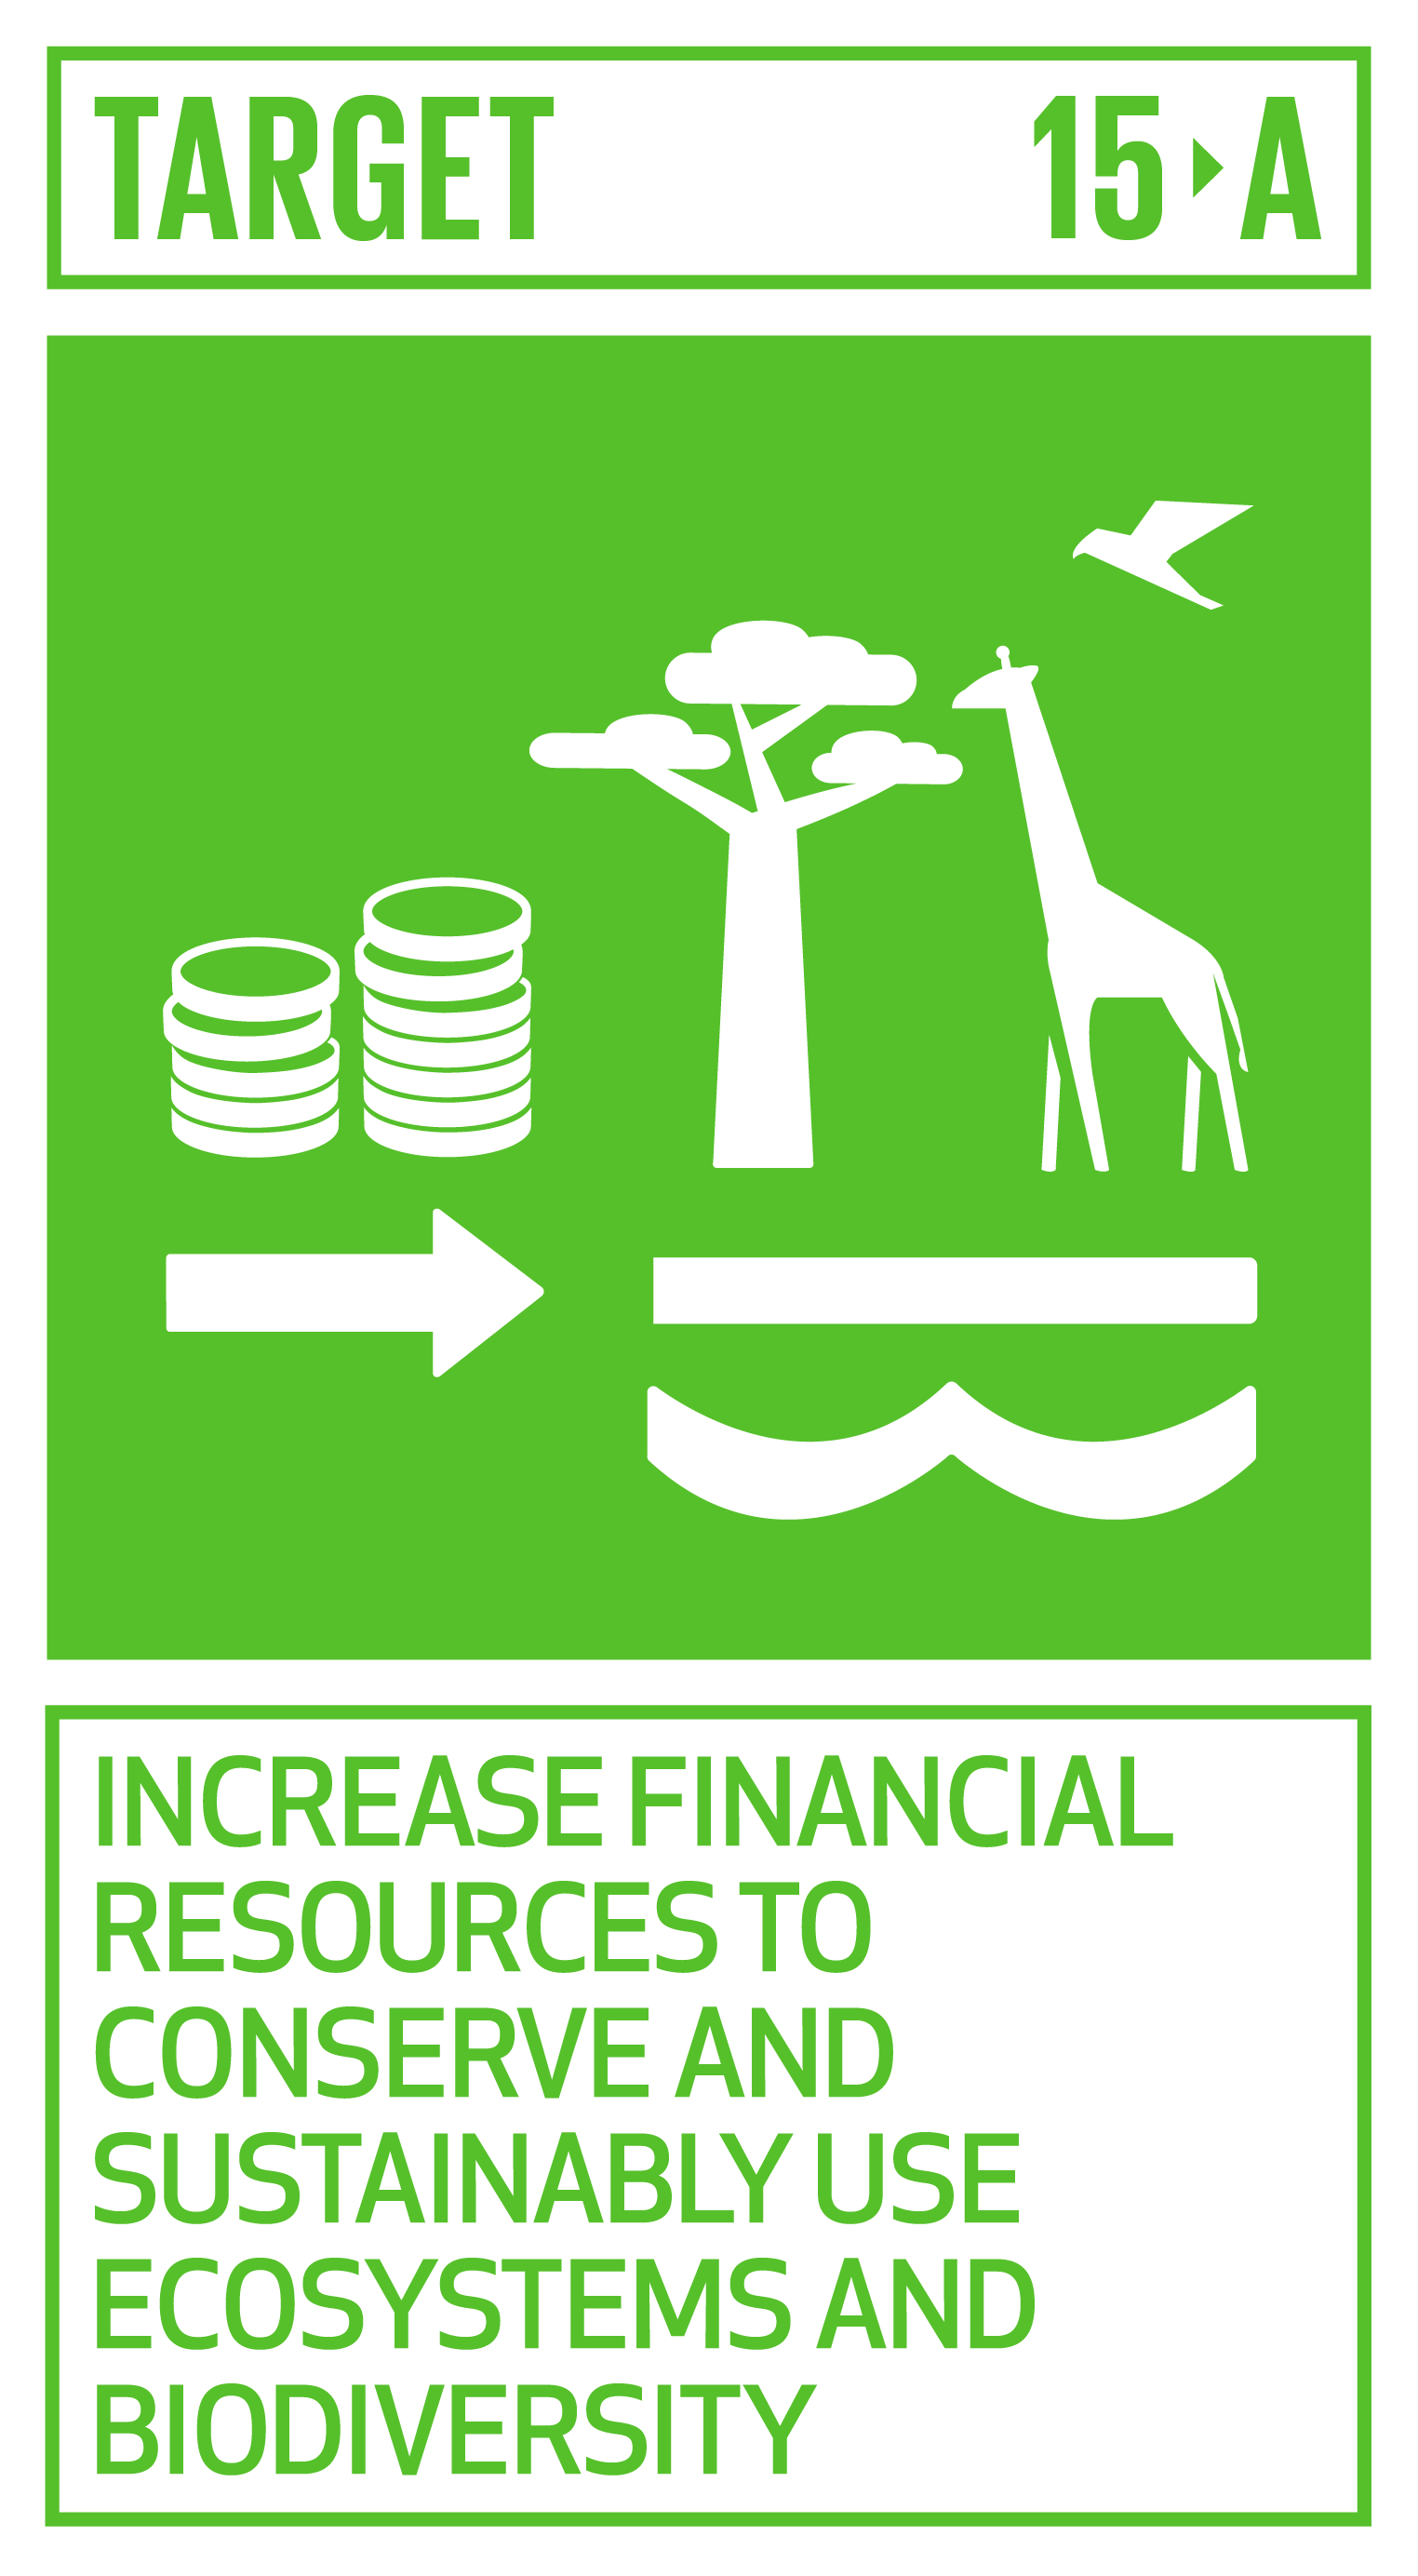 Goal,target,永續發展目標SDGs15,目標15.A新增財政資源以保護和可持續利用生態系統和生物多樣性